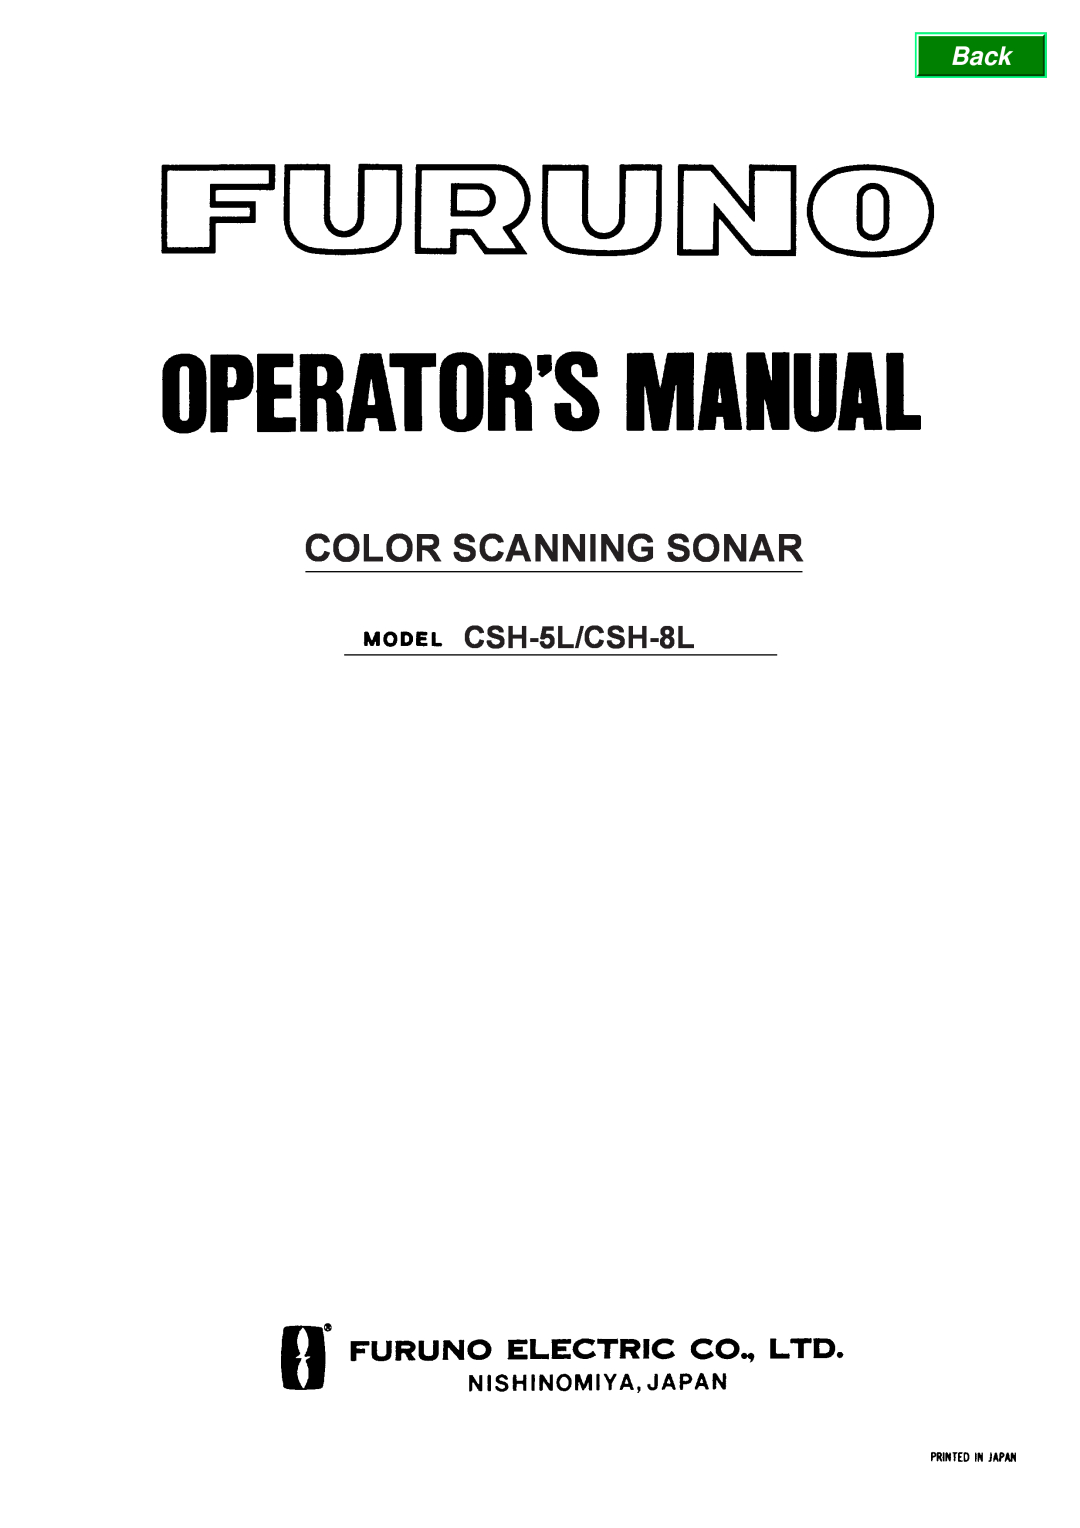 Furuno CSH-5L/CSH-8L manual Color Scanning Sonar, Back 